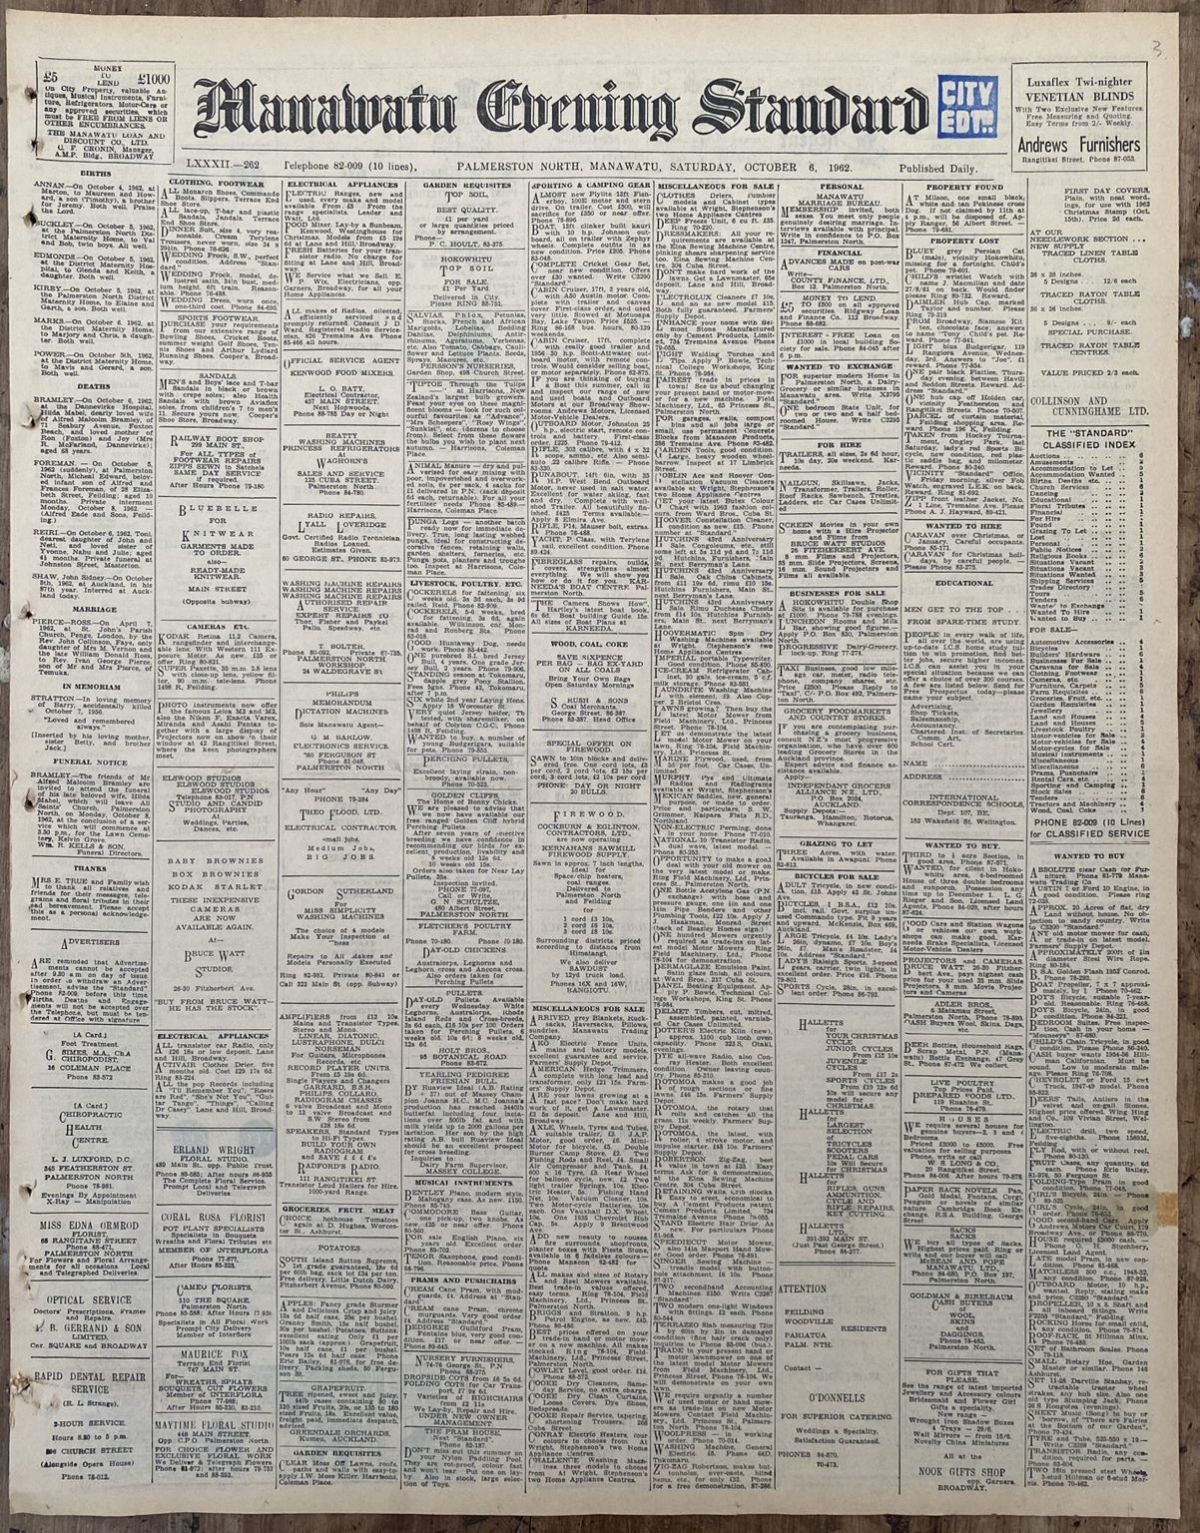 OLD NEWSPAPER: Manawatu Evening Standard - 18 October 1962